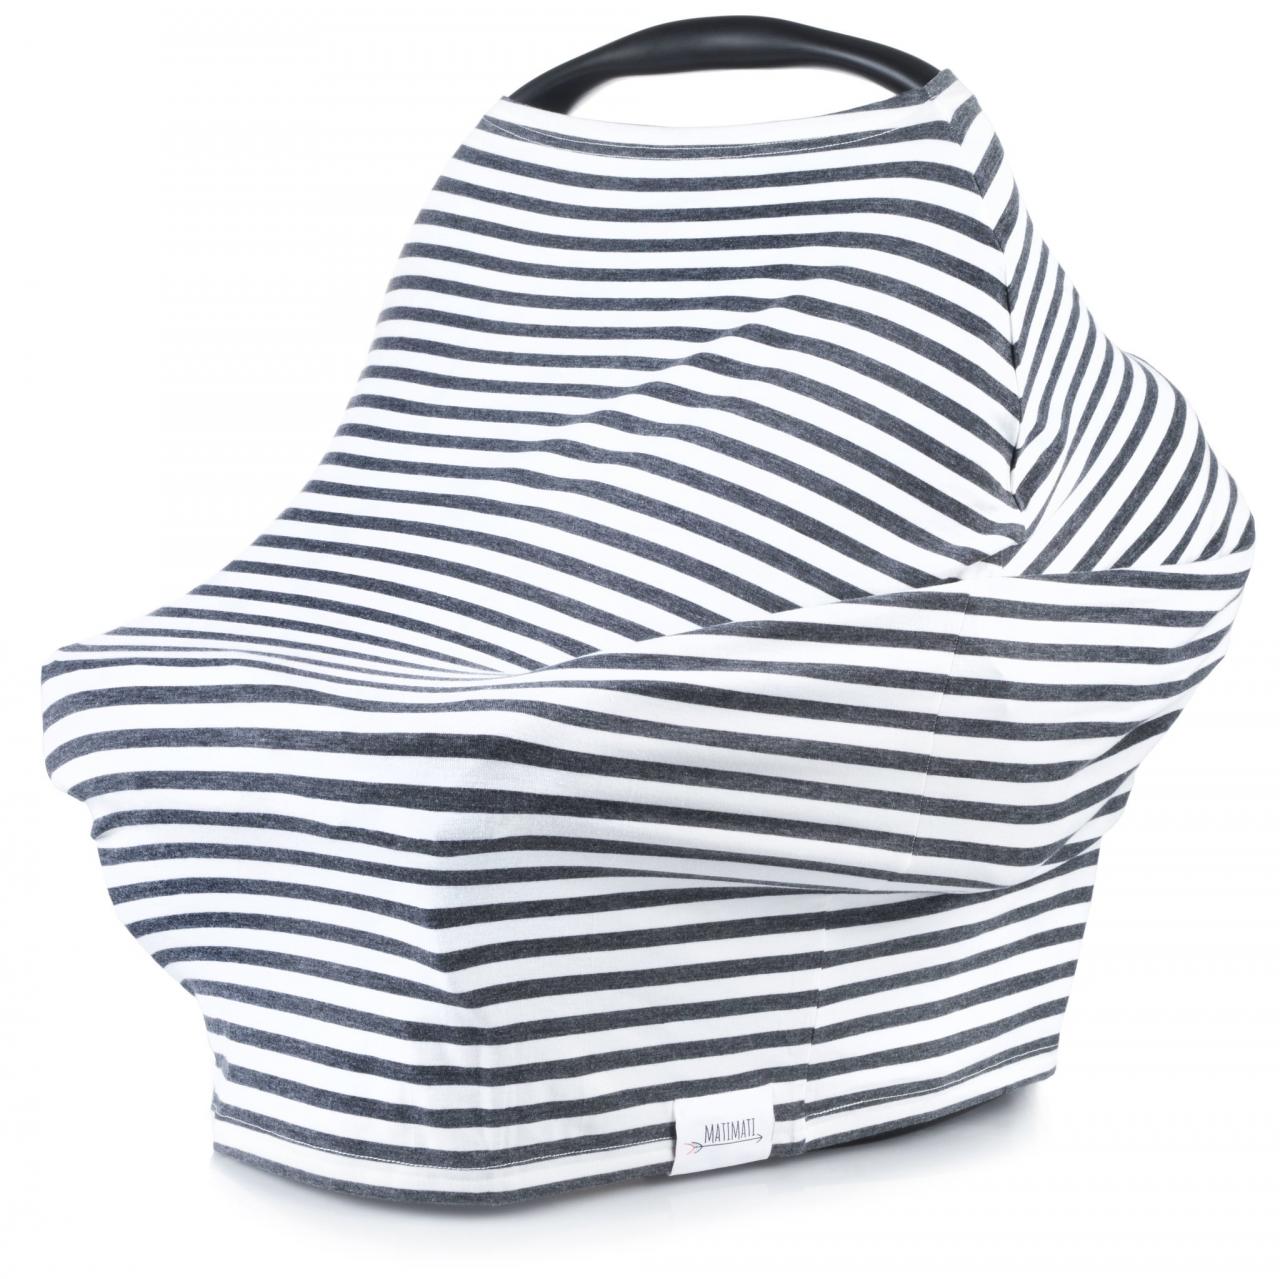 5-in-1 Carseat & Nursing Cover (Classic Stripe) | Matimati Baby